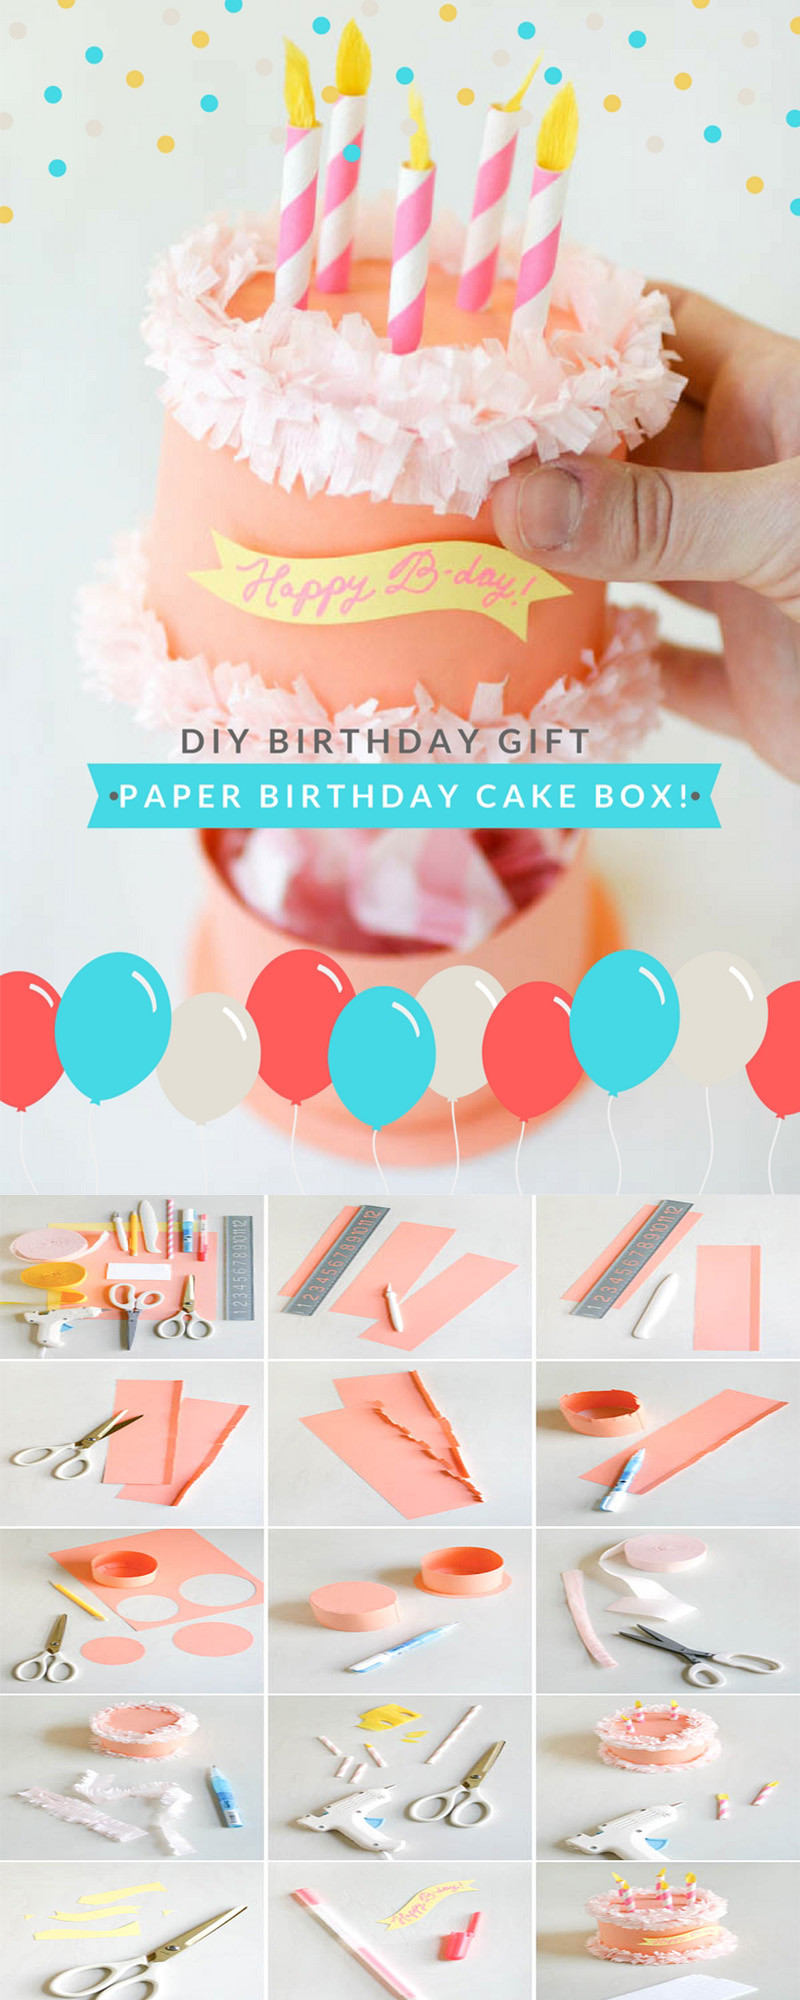 DIY Bday Gift Ideas
 DIY Gift Ideas for Your Boyfriend Paper Birthday Cake Box